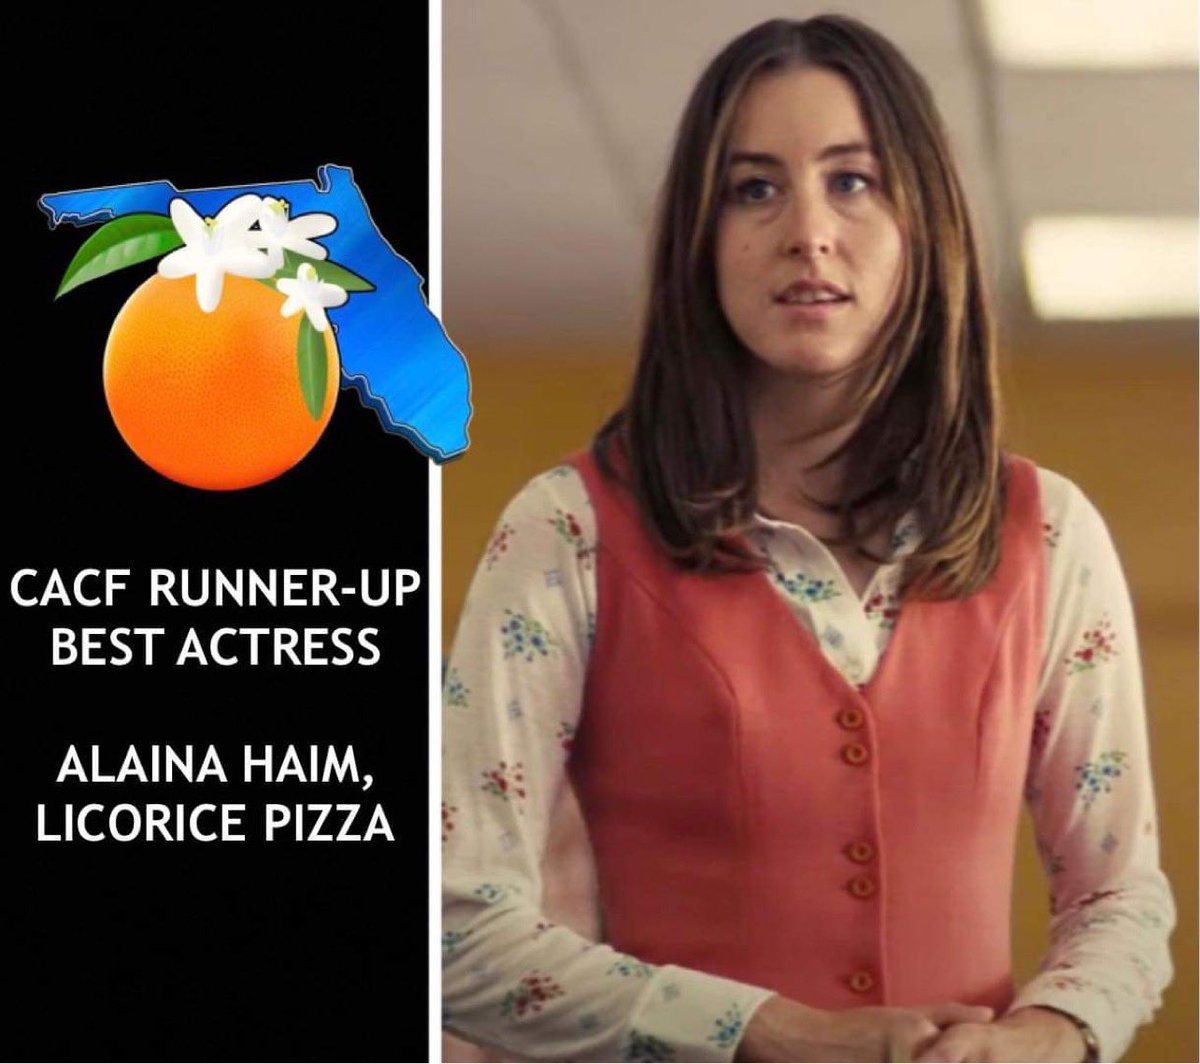 Best Actress Runner-up: Alana Haim, Licorice Pizza 

#AlanaHaim #LicoricePizza @LicoricePizza @MgmStudios #CACF2021